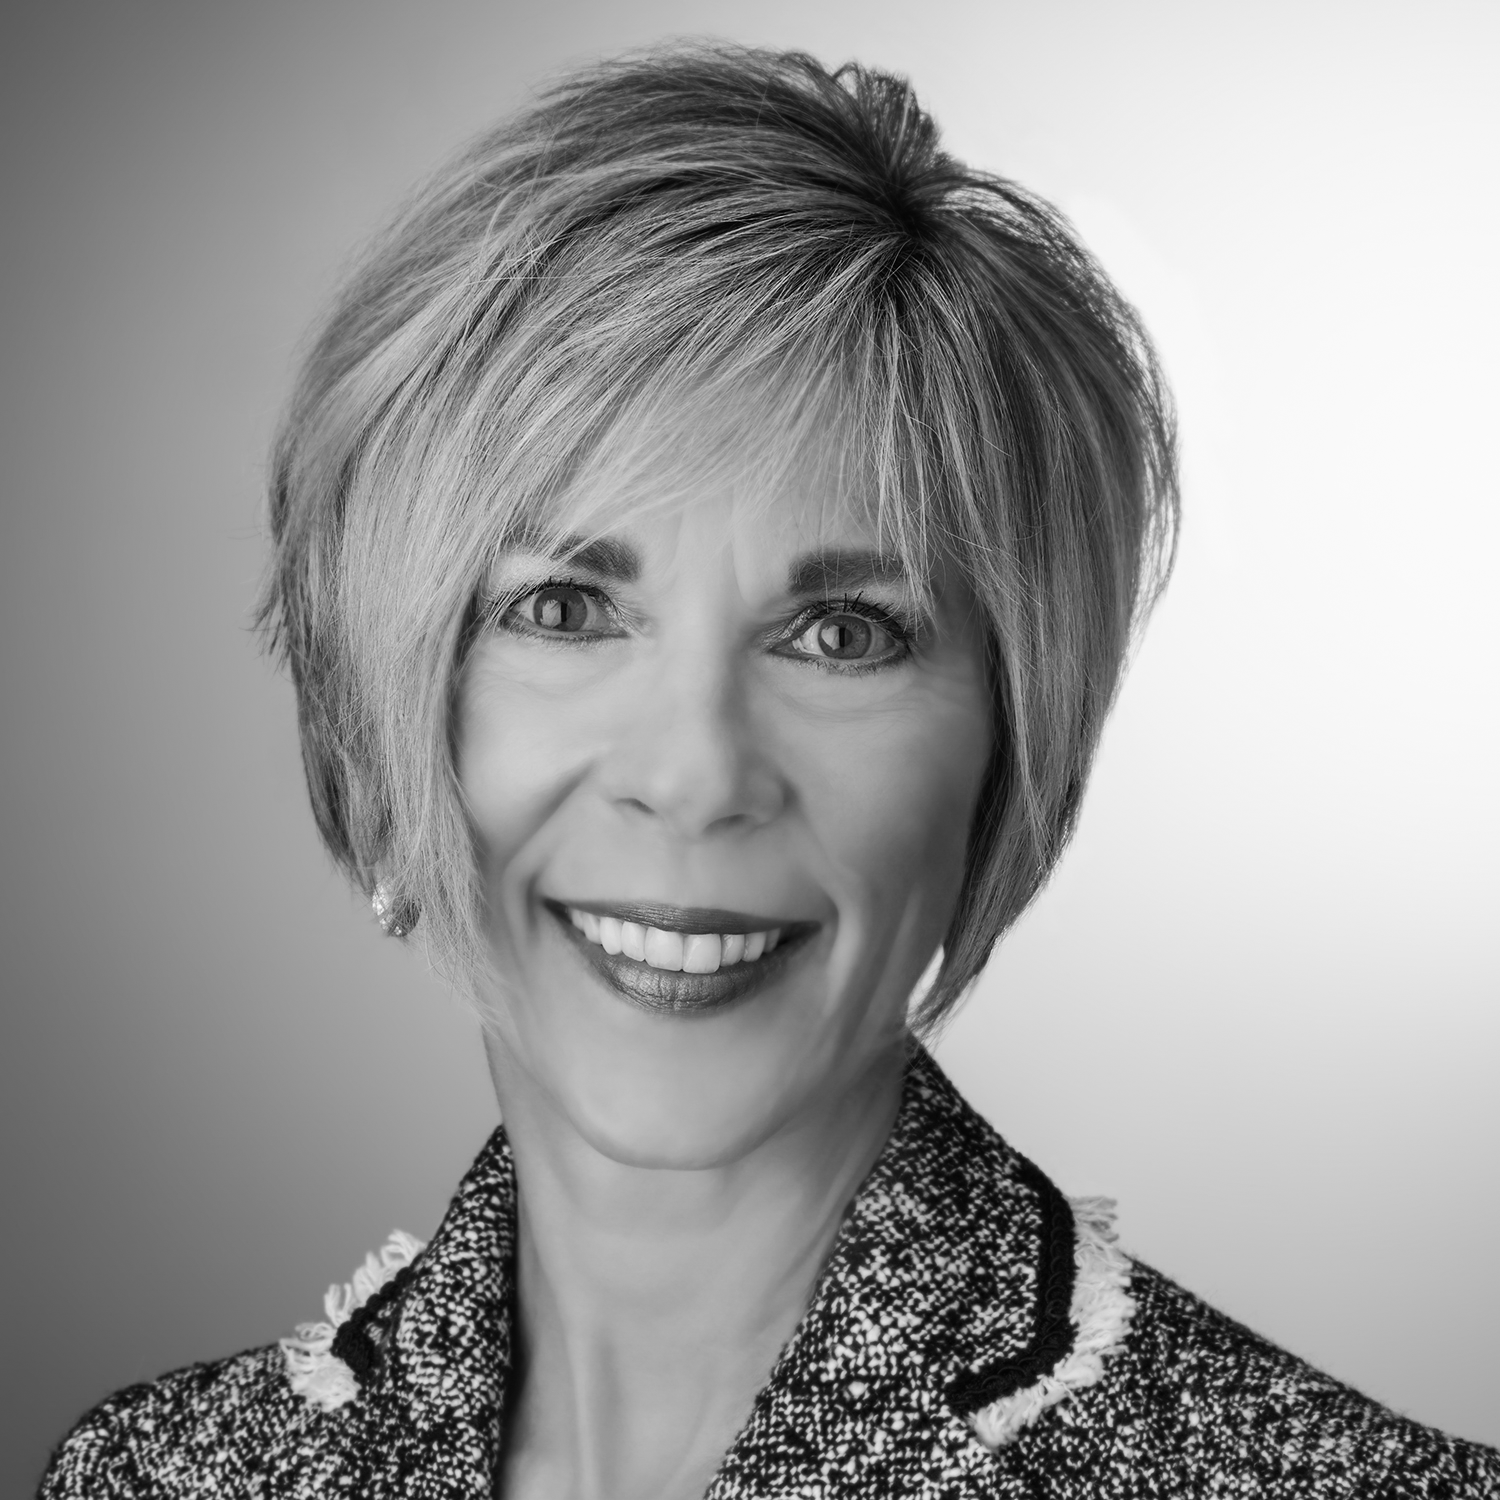 Julie Steinert, a member of the Friends of PBS Wisconsin board